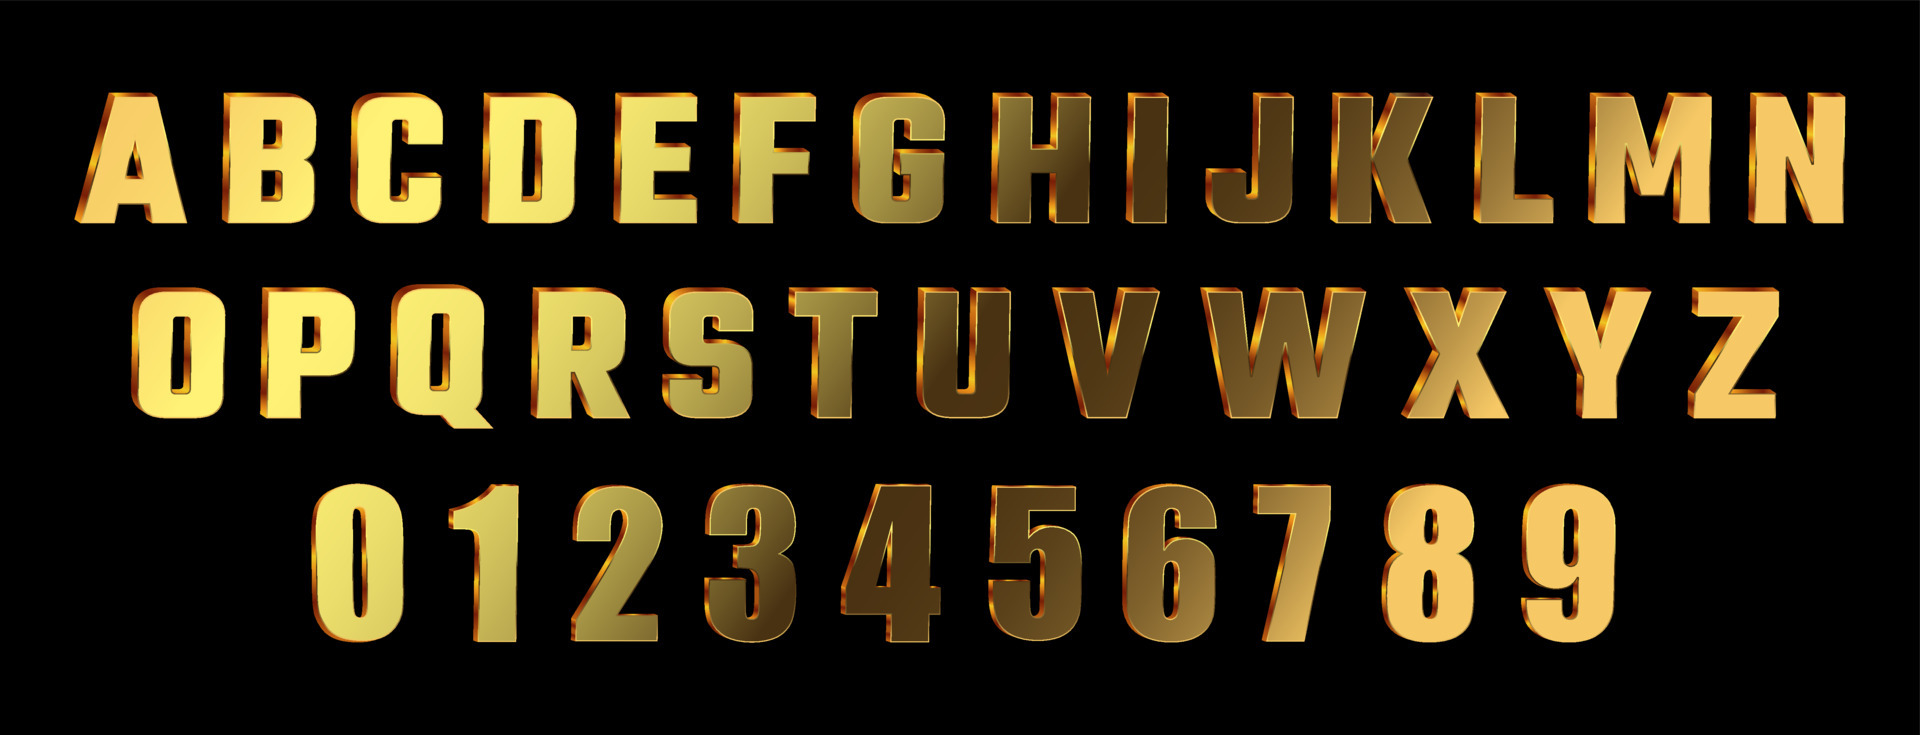 Golden 3d font metallic gold letters luxury Vector Image